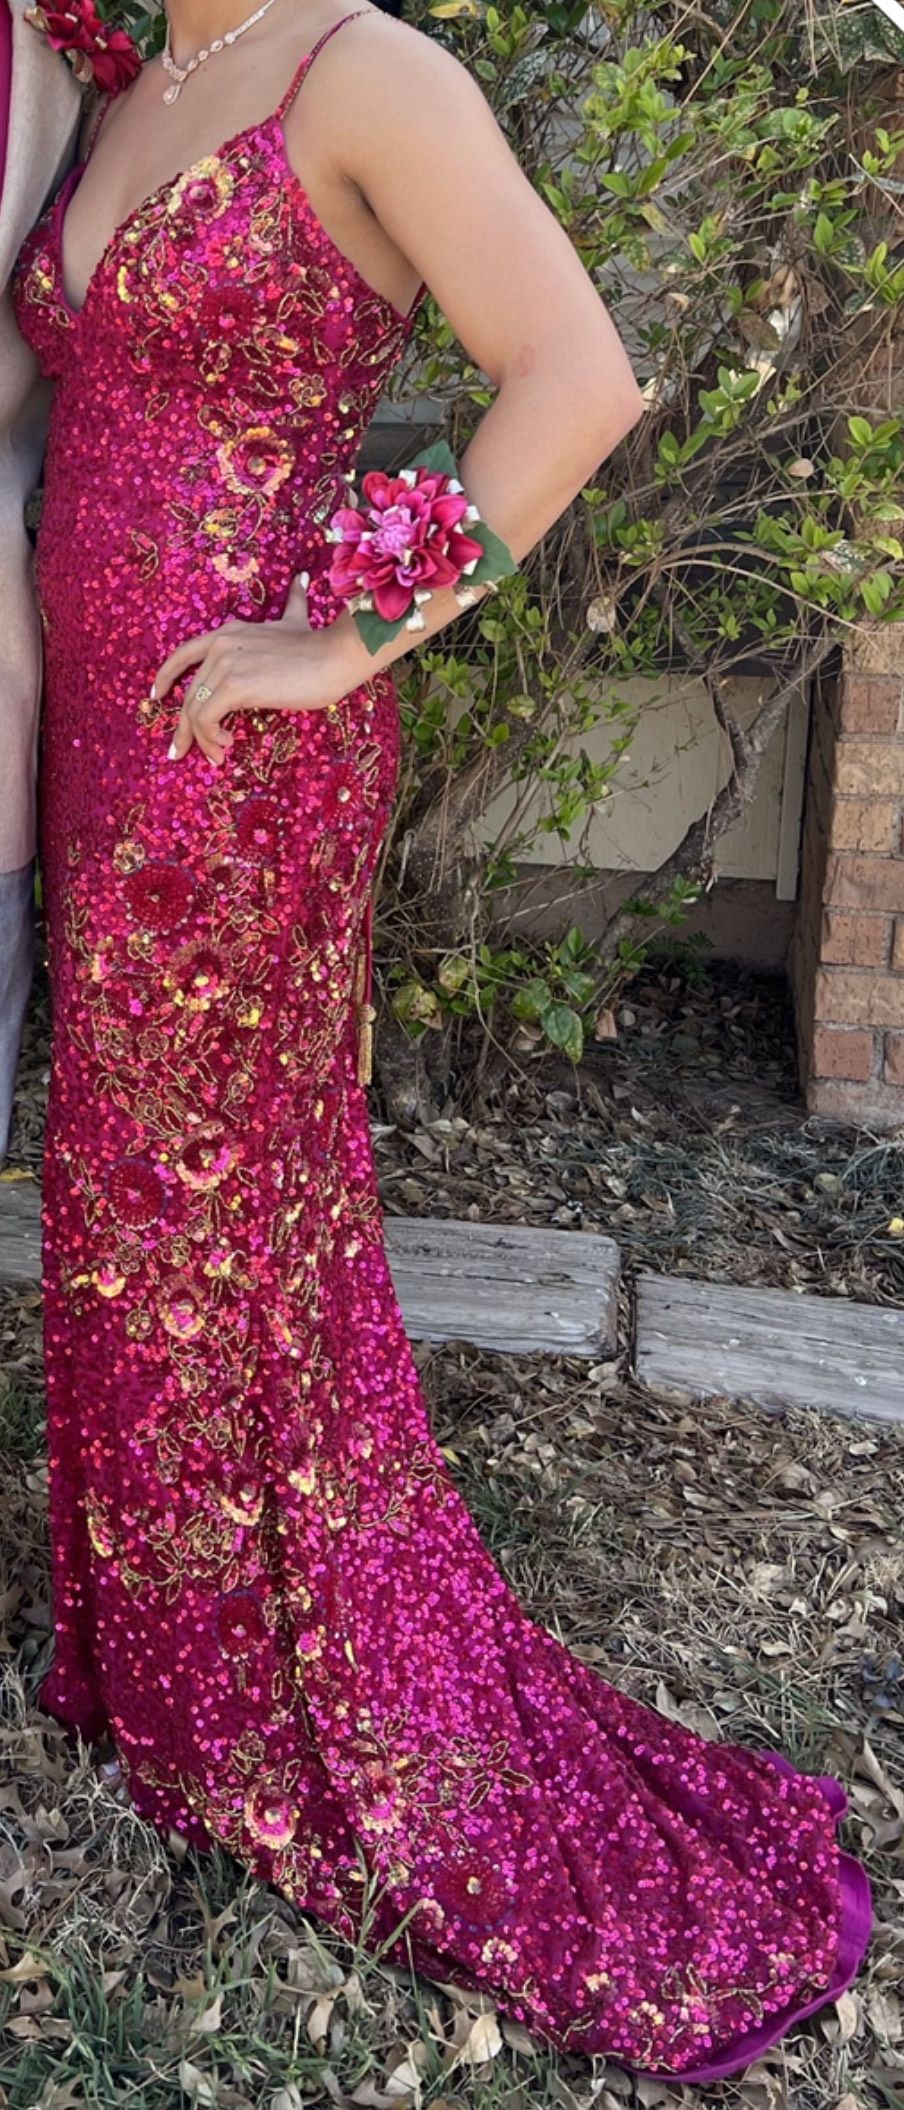 Rachel Allan Size 4 Prom Plunge Pink Mermaid Dress on Queenly